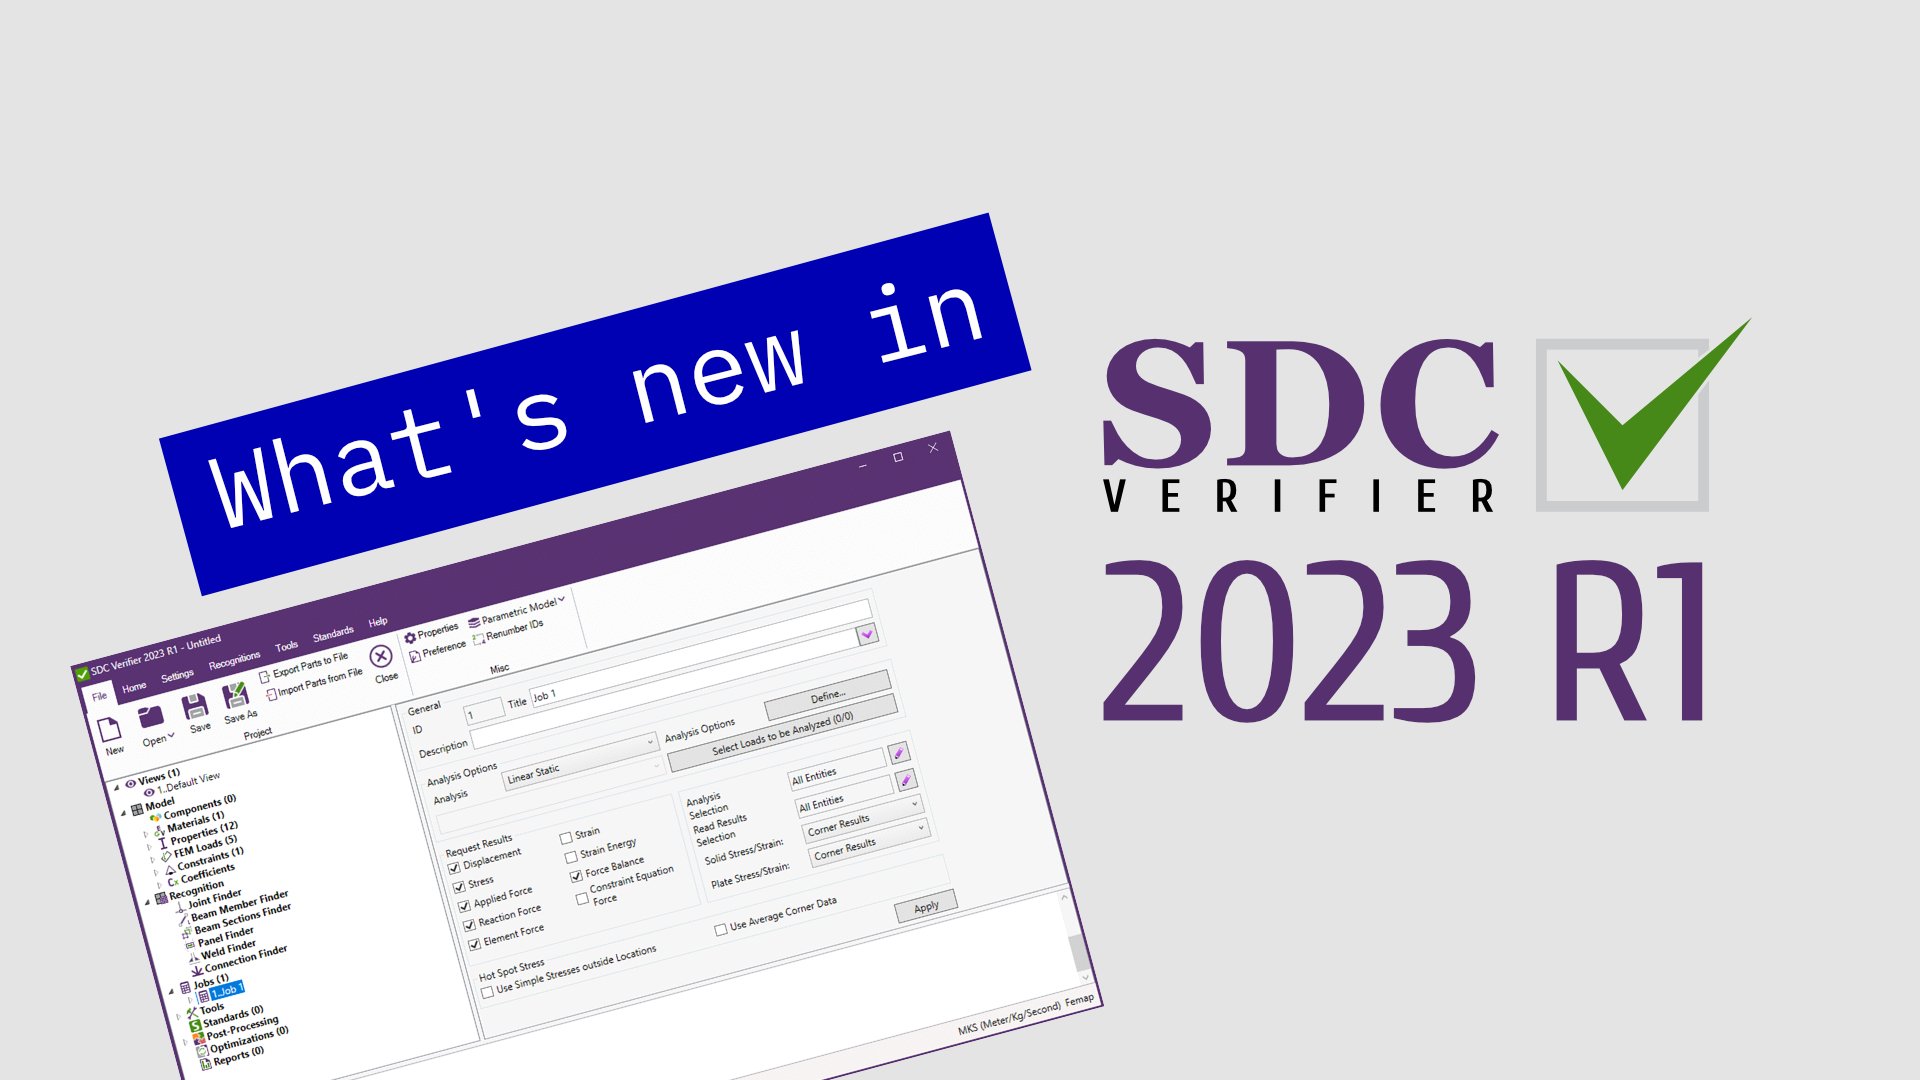 Webinar on the latest SDC Verifier 2023 R1 release